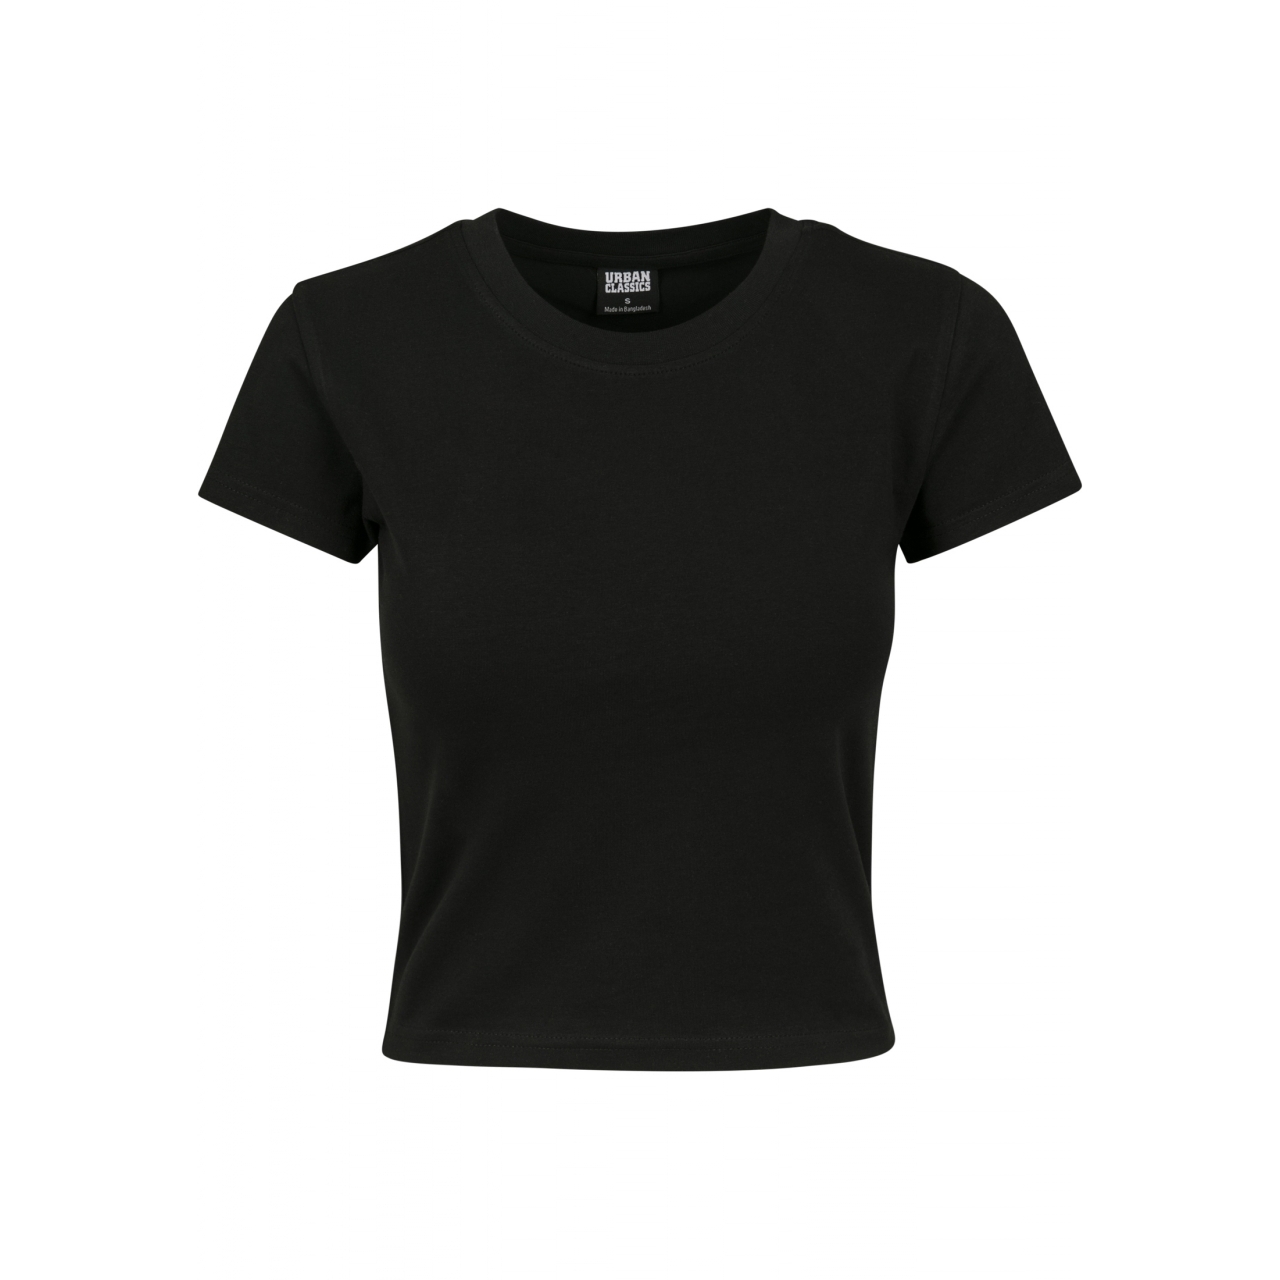 Triko dámské Urban Classics Ladies Stretch Jersey - černé, S